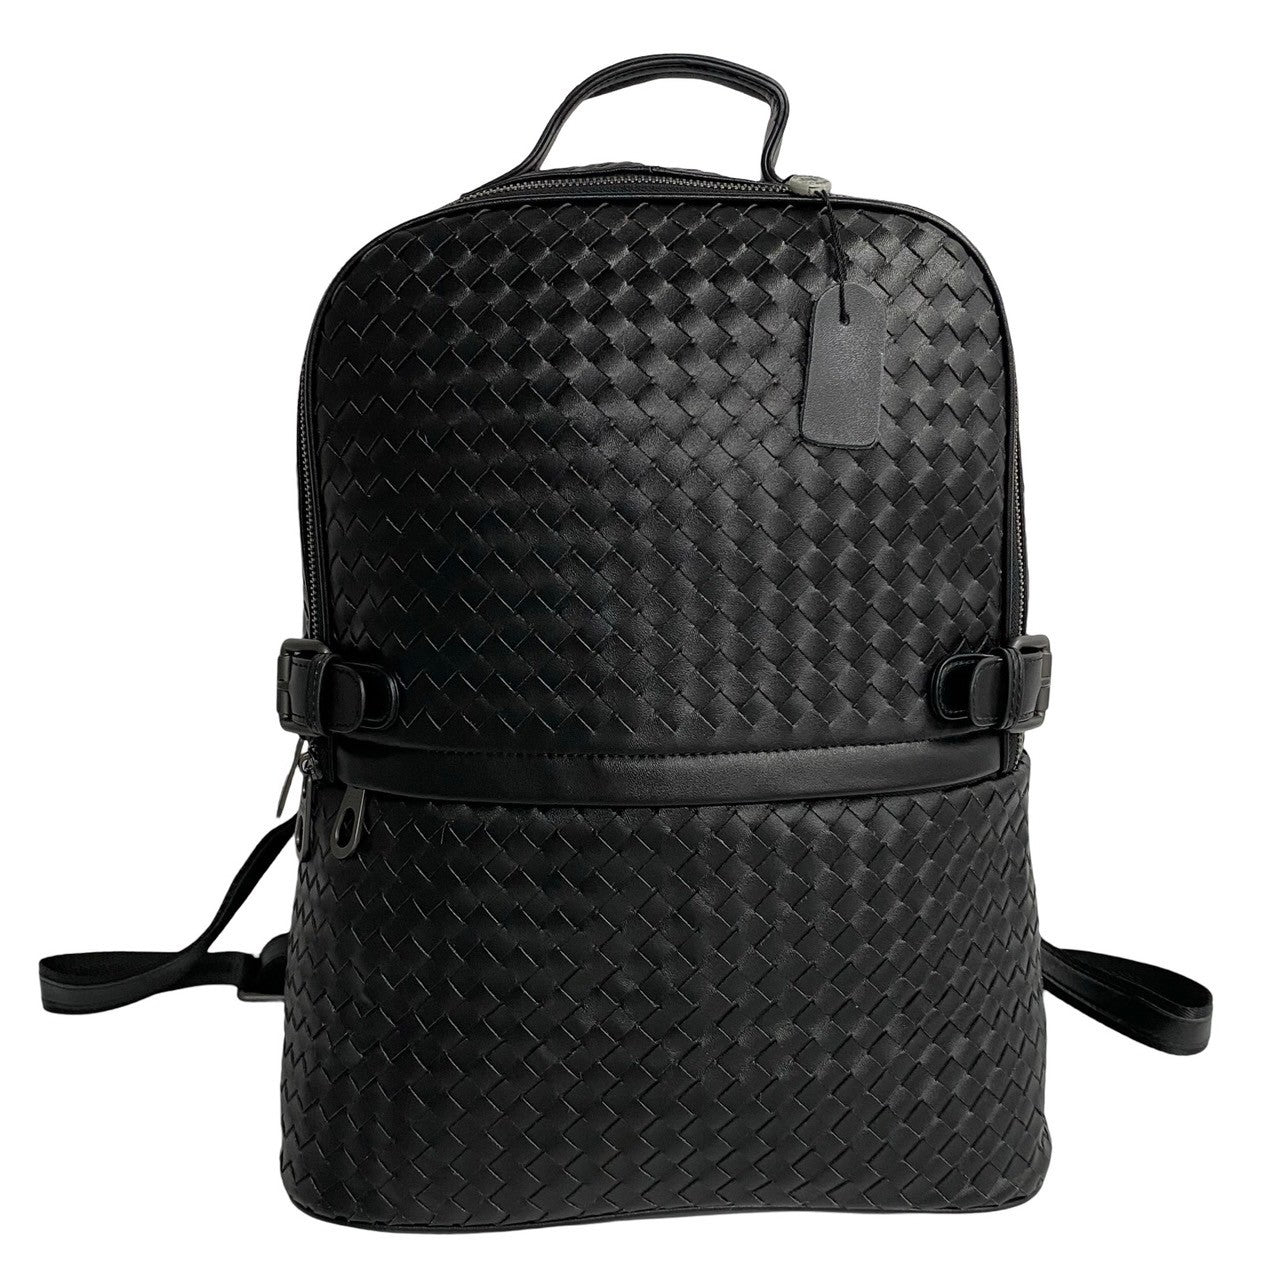 Bottega Veneta Intrecciato Backpack Leather Backpack in Excellent condition